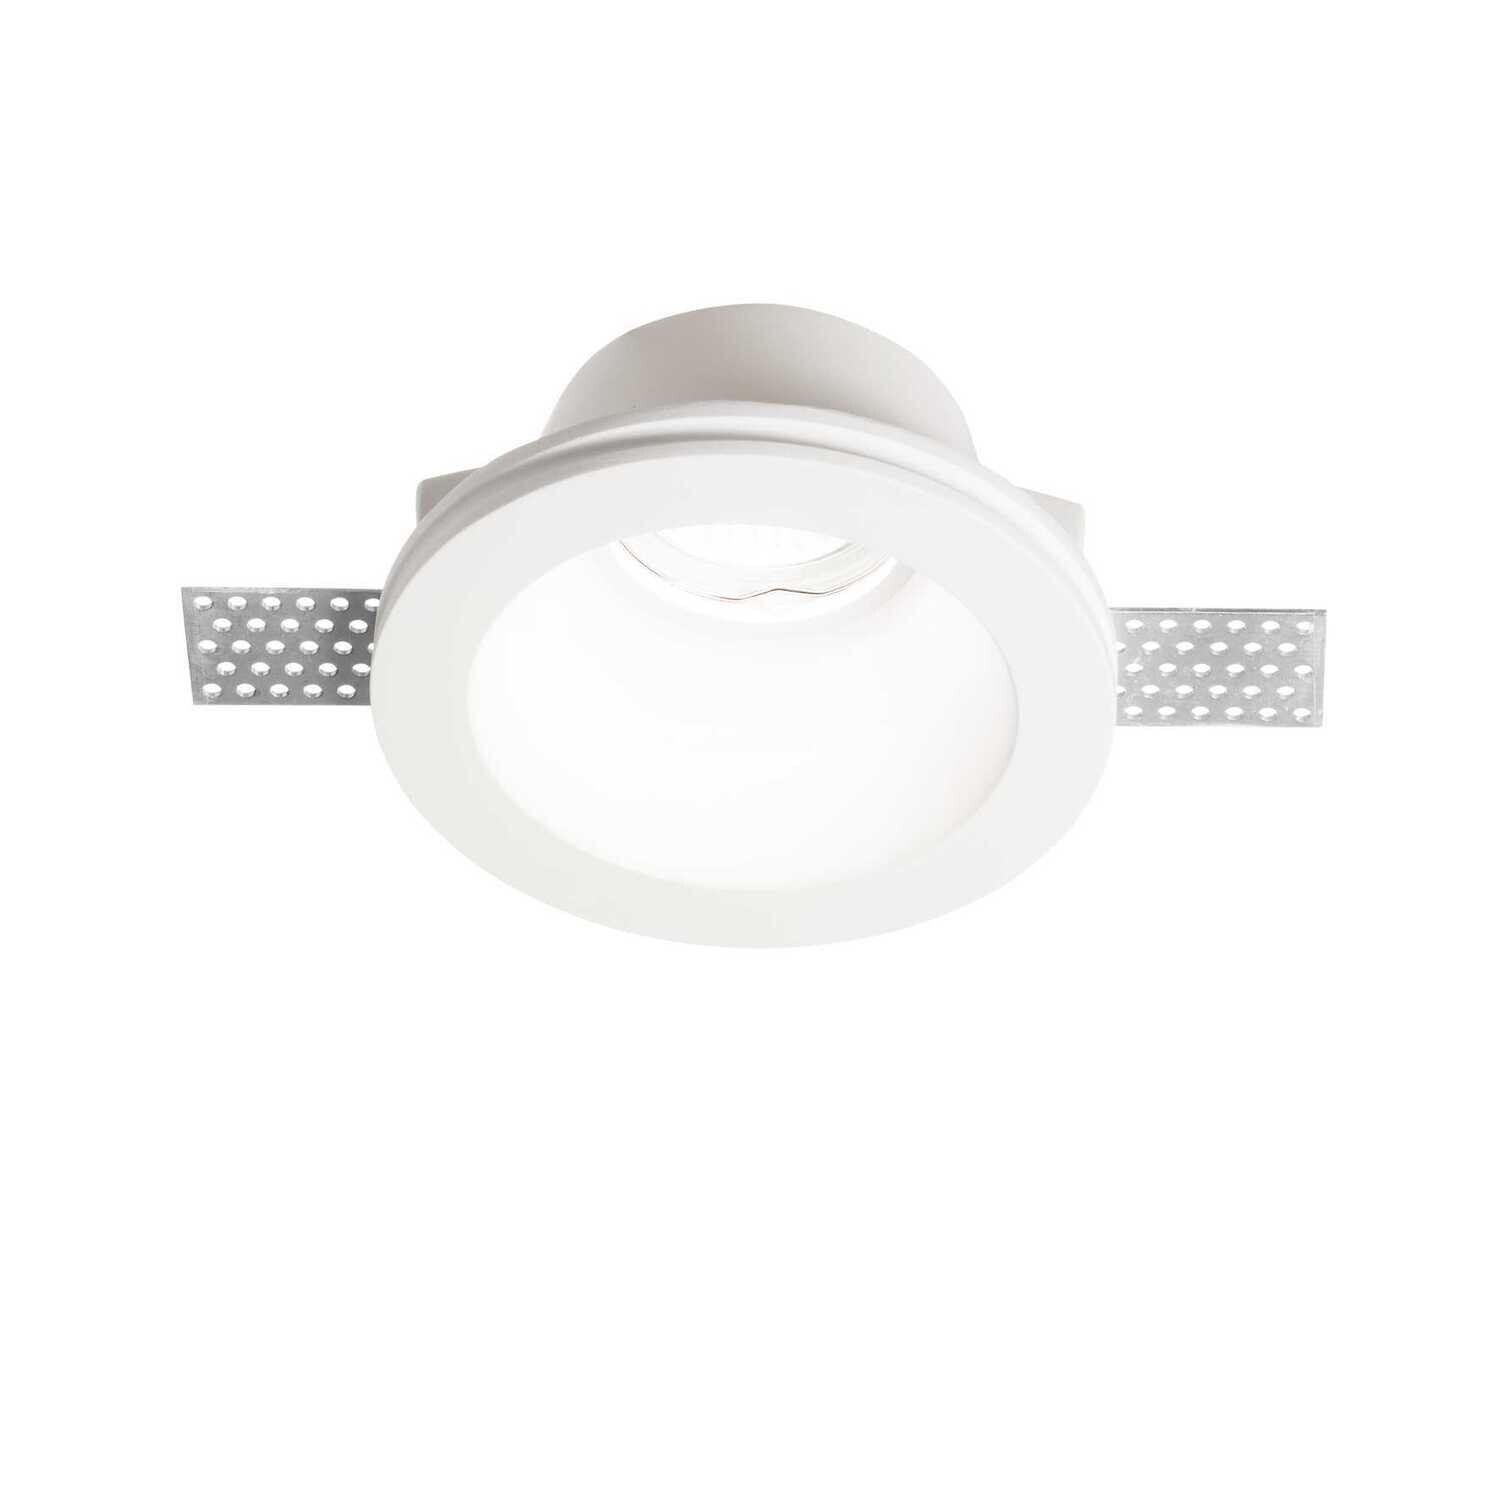 SAMBA round Ø90 recessed trimless Plaster Spot light for GU10